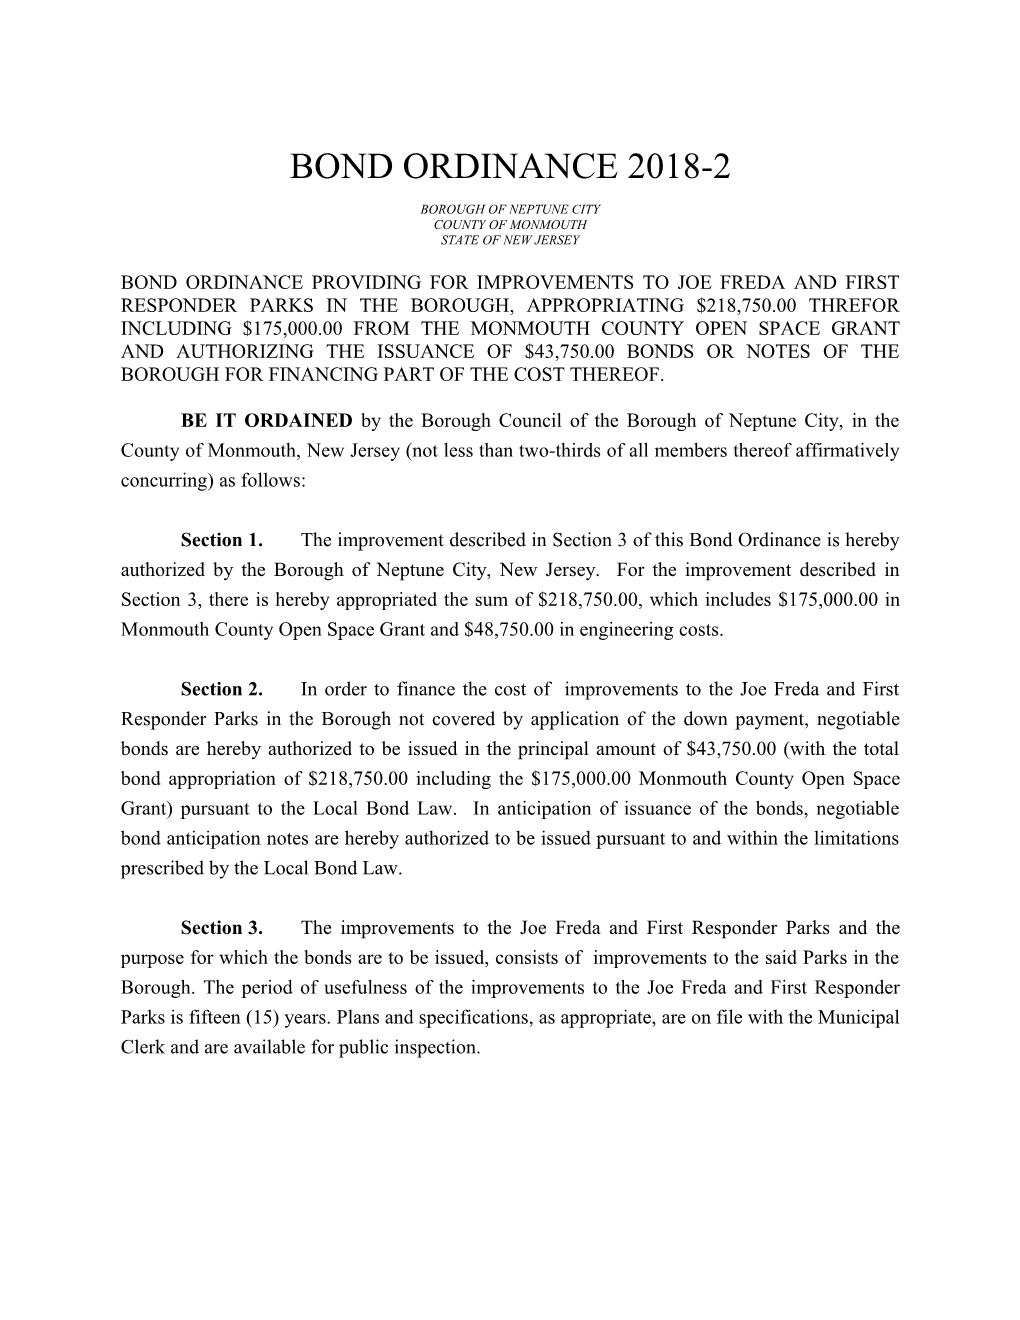 Bond Ordinance 2018-2